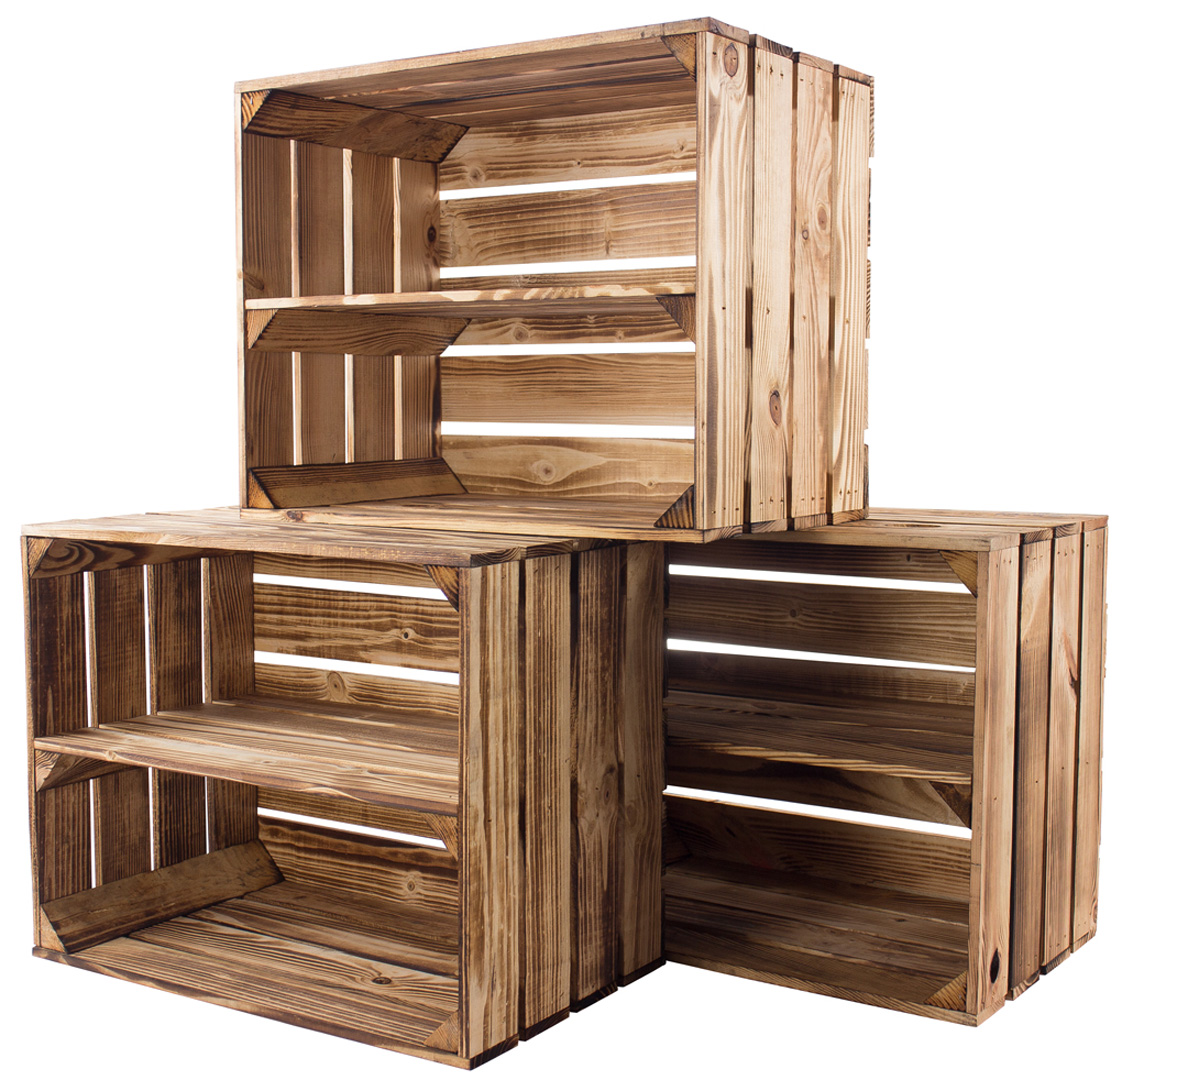 Houten kistje kopen? Online grootste assortiment houten kistjes | Kisten Koning